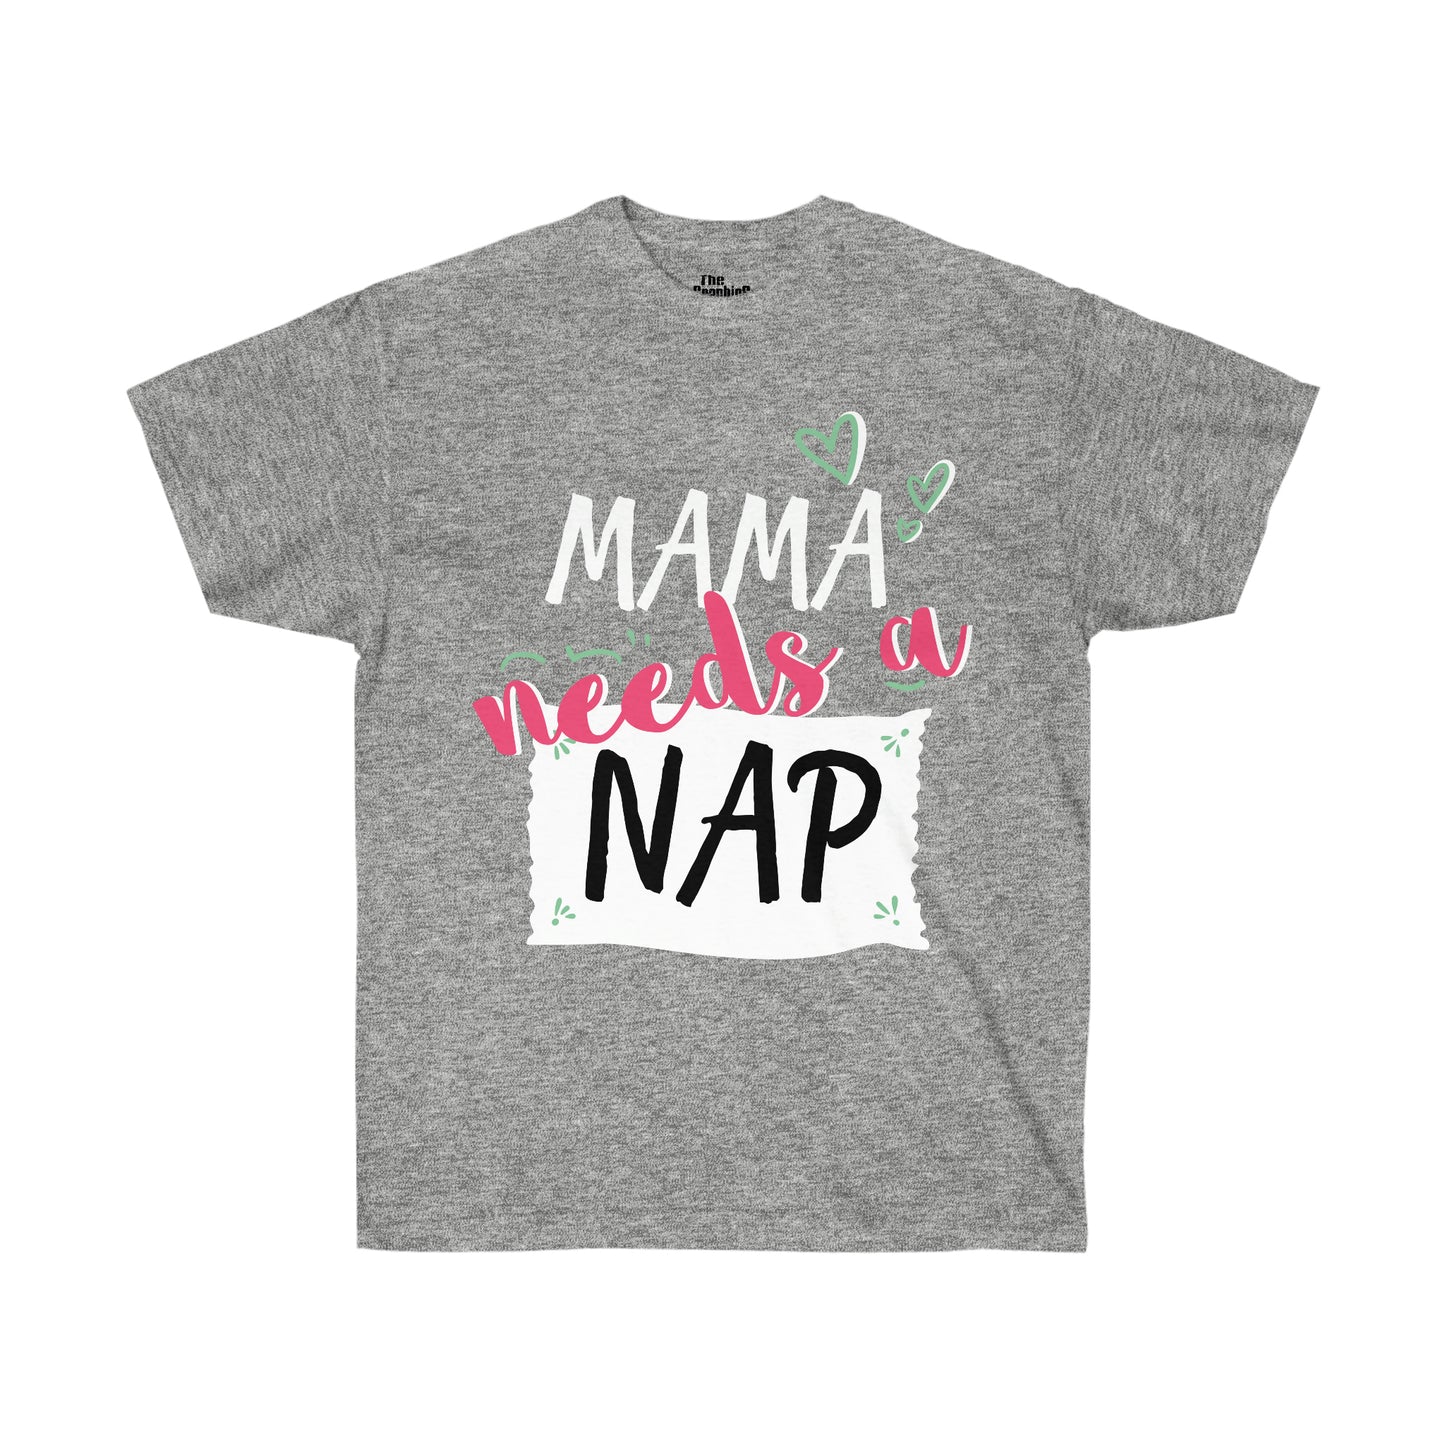 Momma Needs a nap